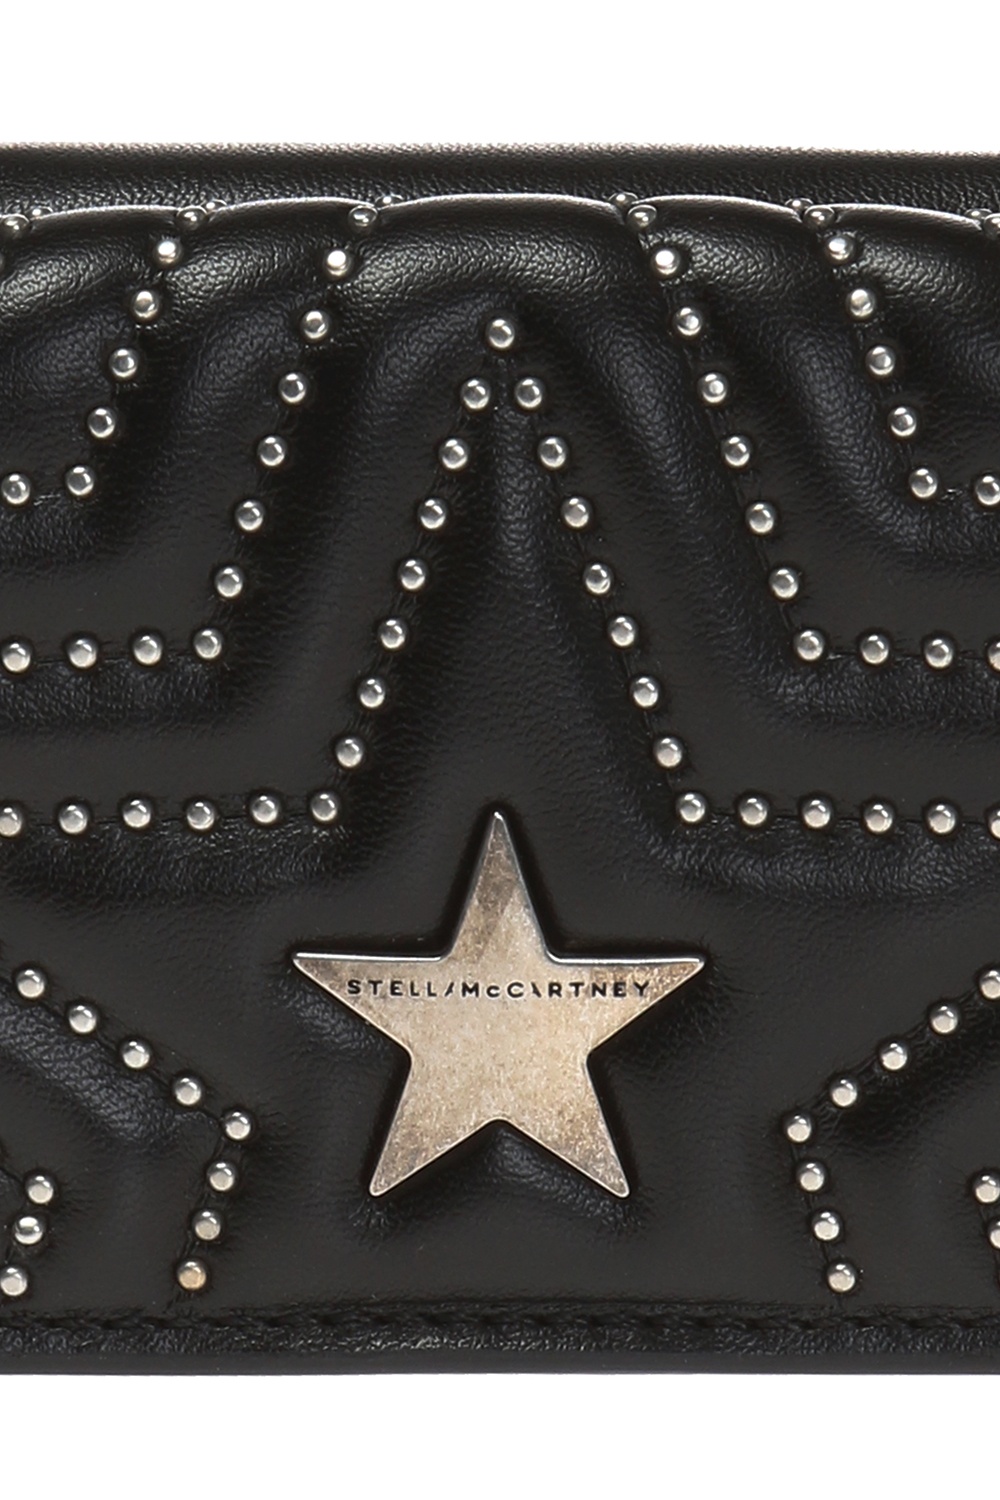 Black Wallet with logo Stella McCartney - Vitkac Canada